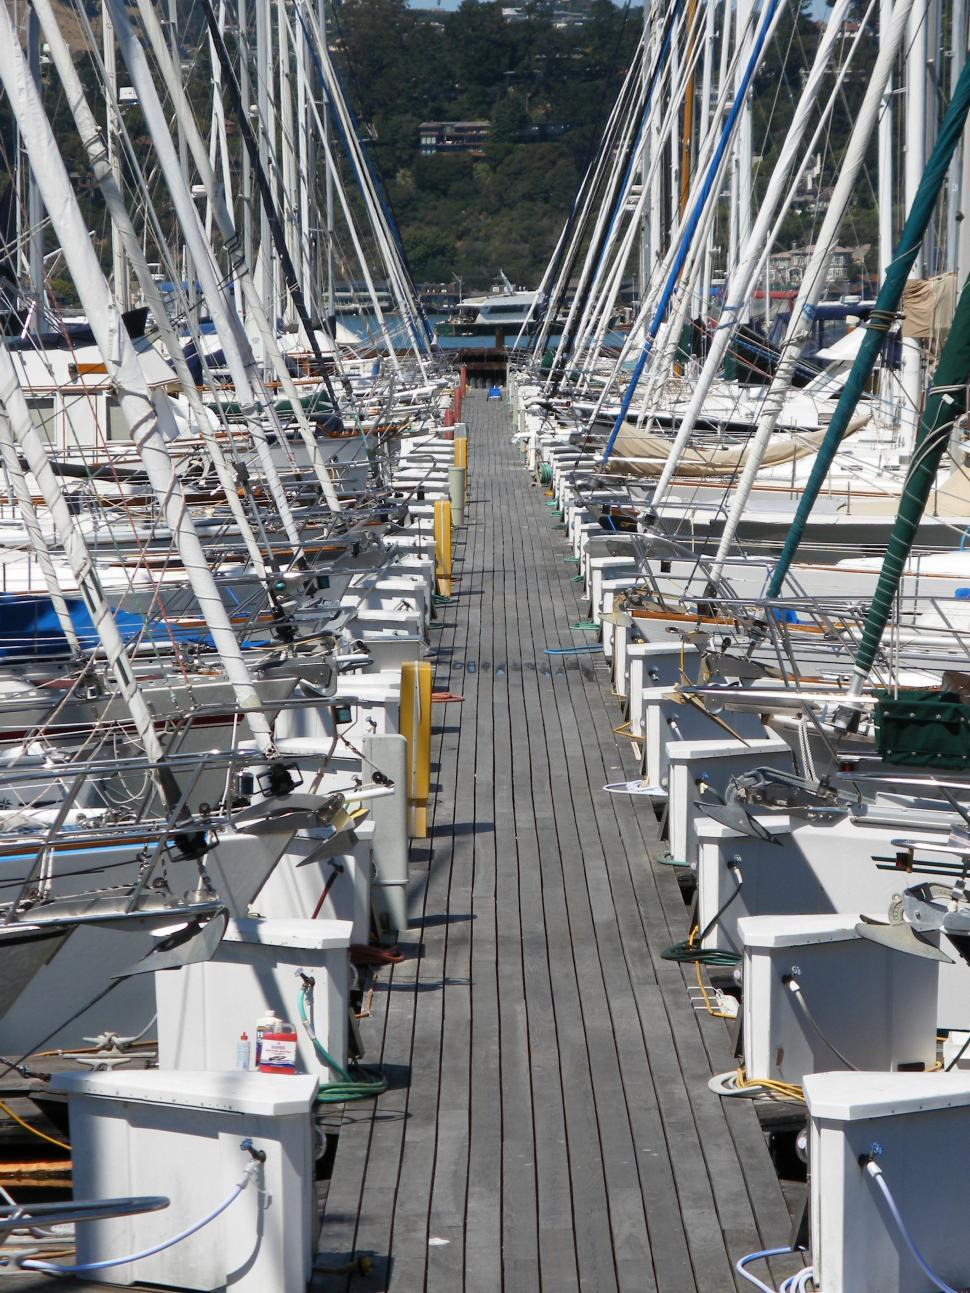 Free Image of Sausalito yachts. 